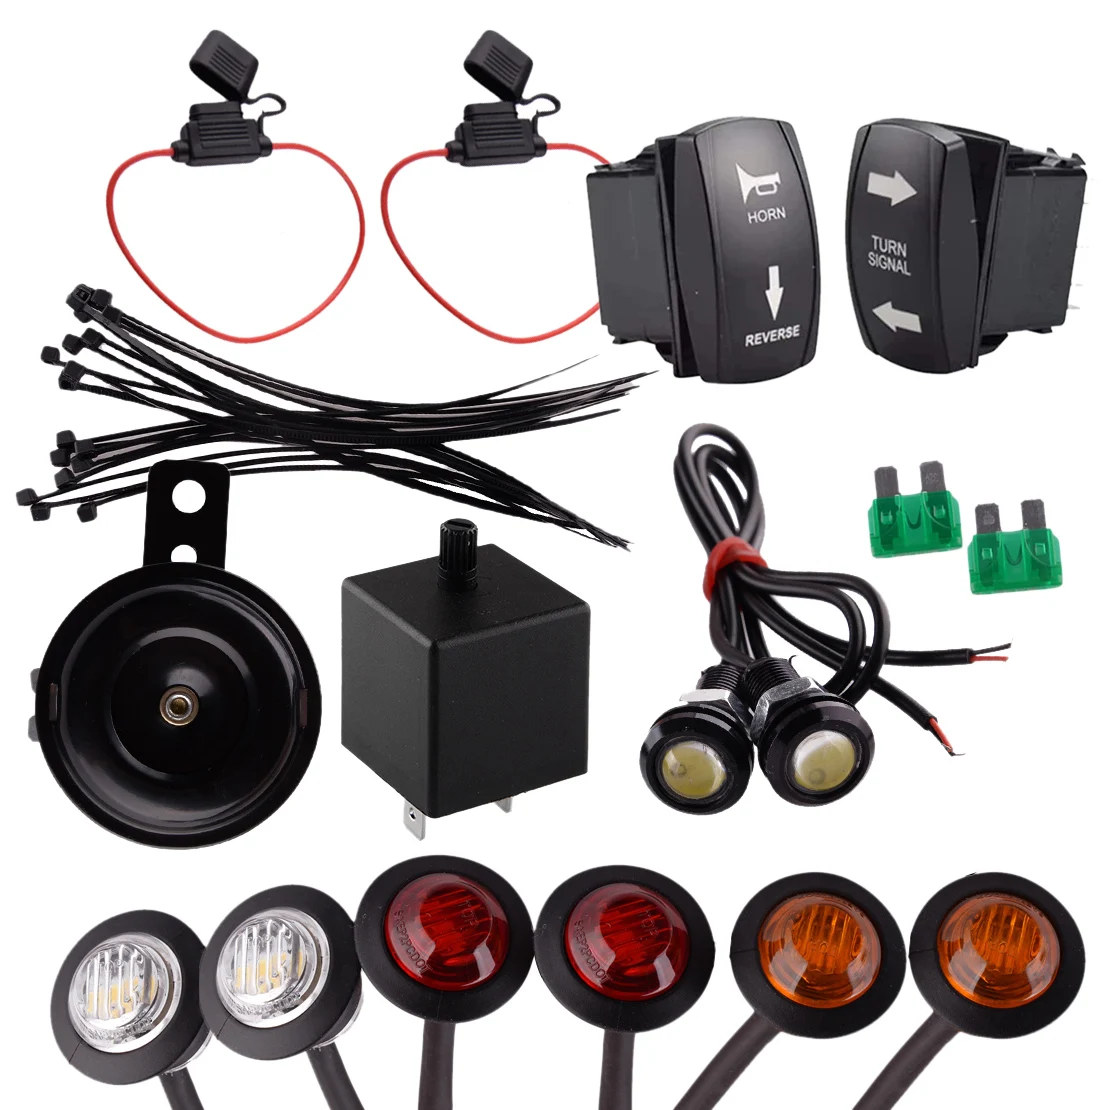 Turn Signal Horn Reverse Rocker Switch LED Light Kit Fit for Yamaha ATV UTV Arctic Cat Can-Am Honda Golf Cart Polaris Kawasaki